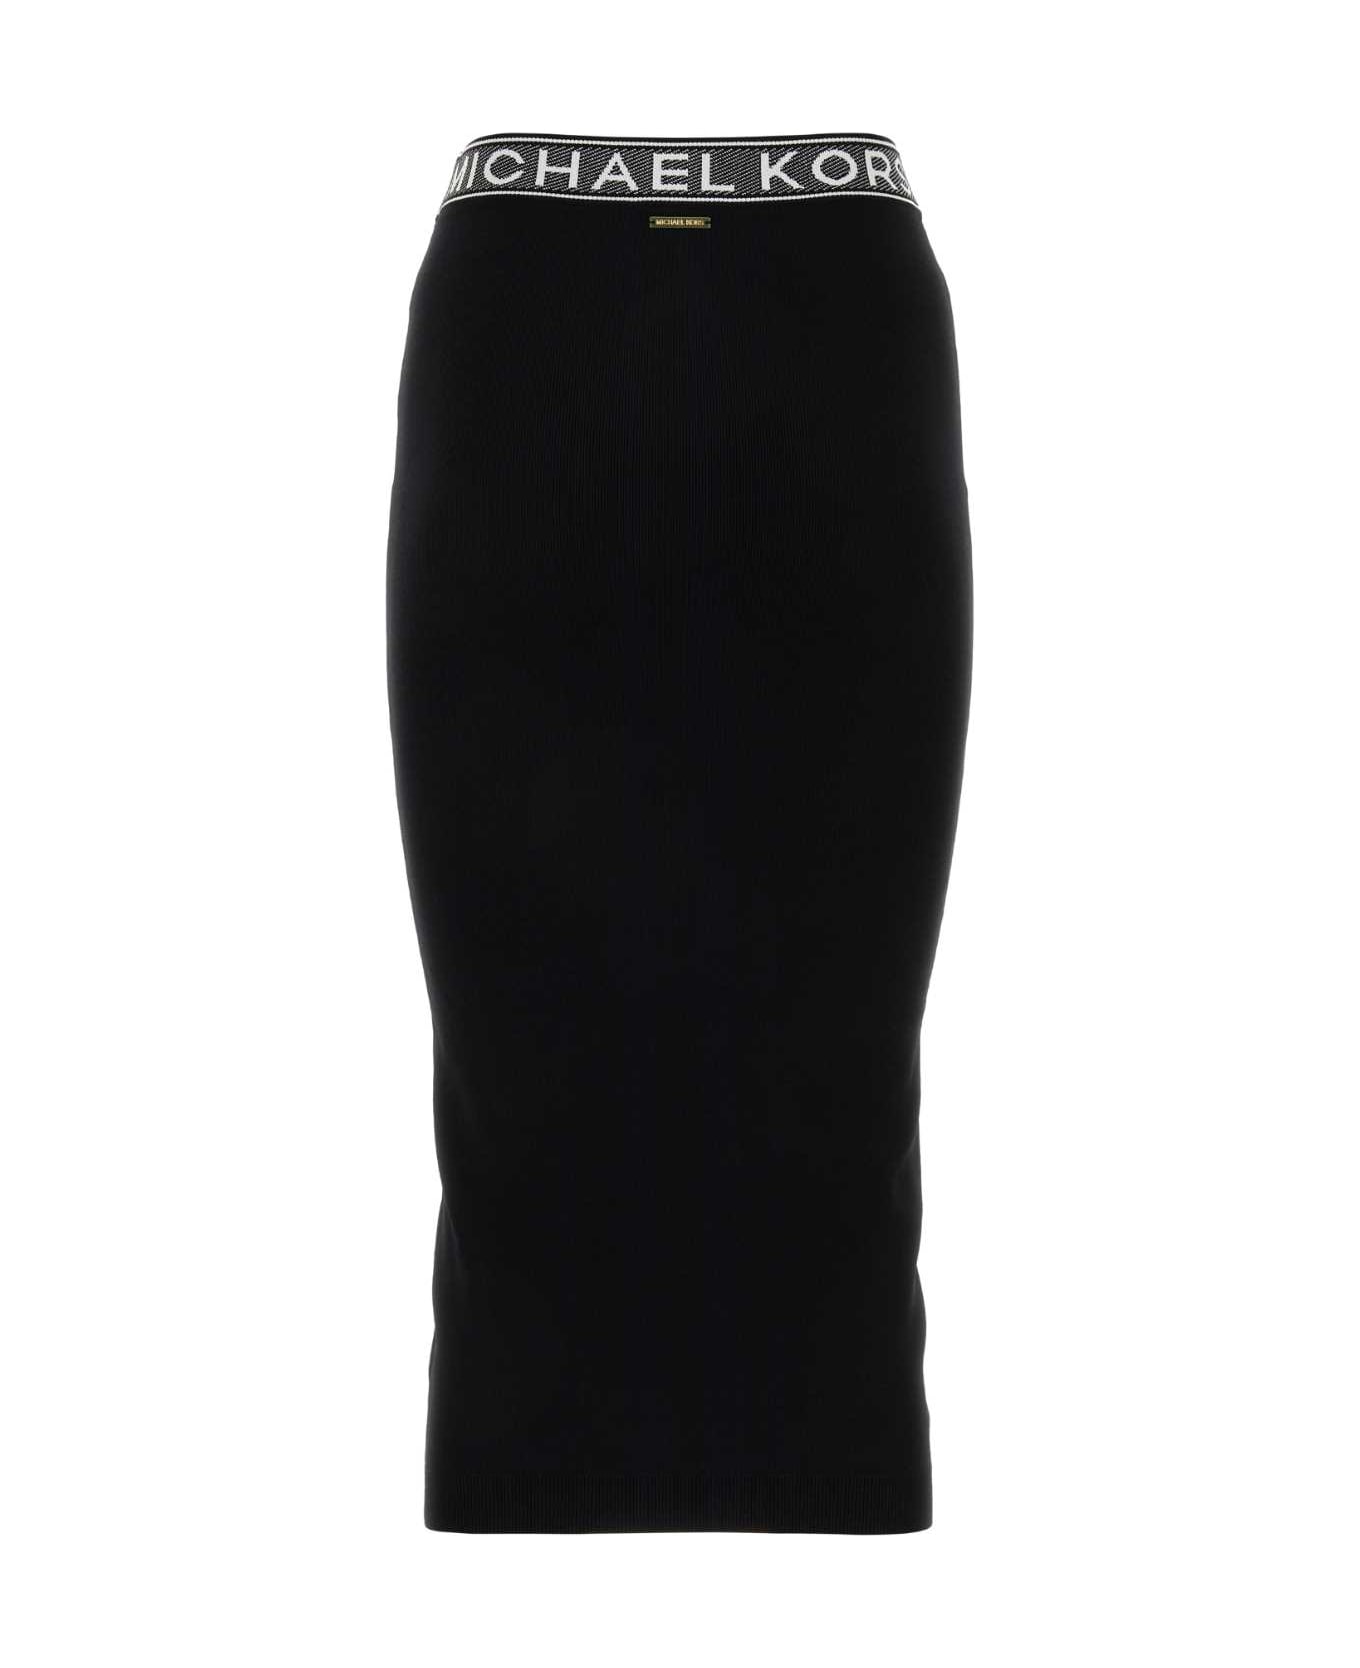 Michael Kors Black Stretch Viscose Blend Skirt - BLACK